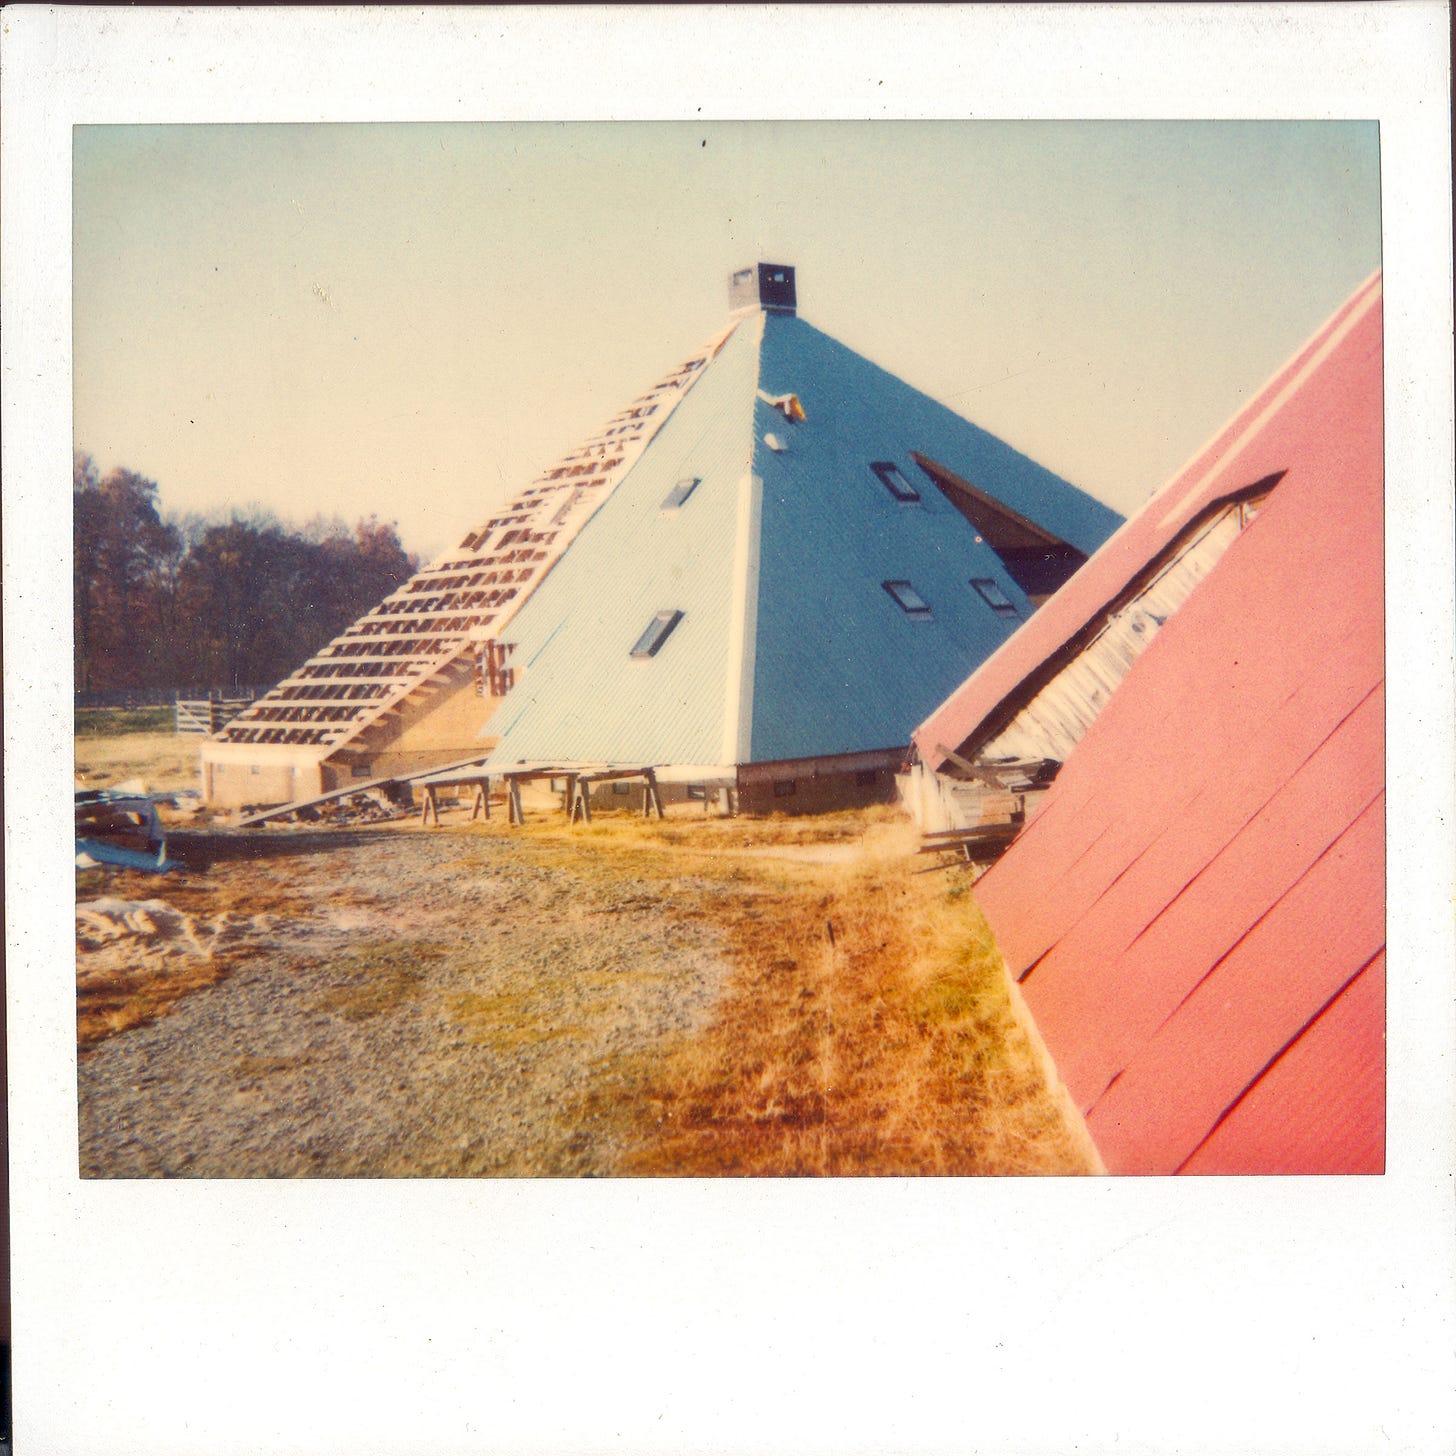 blue pyramid under construction